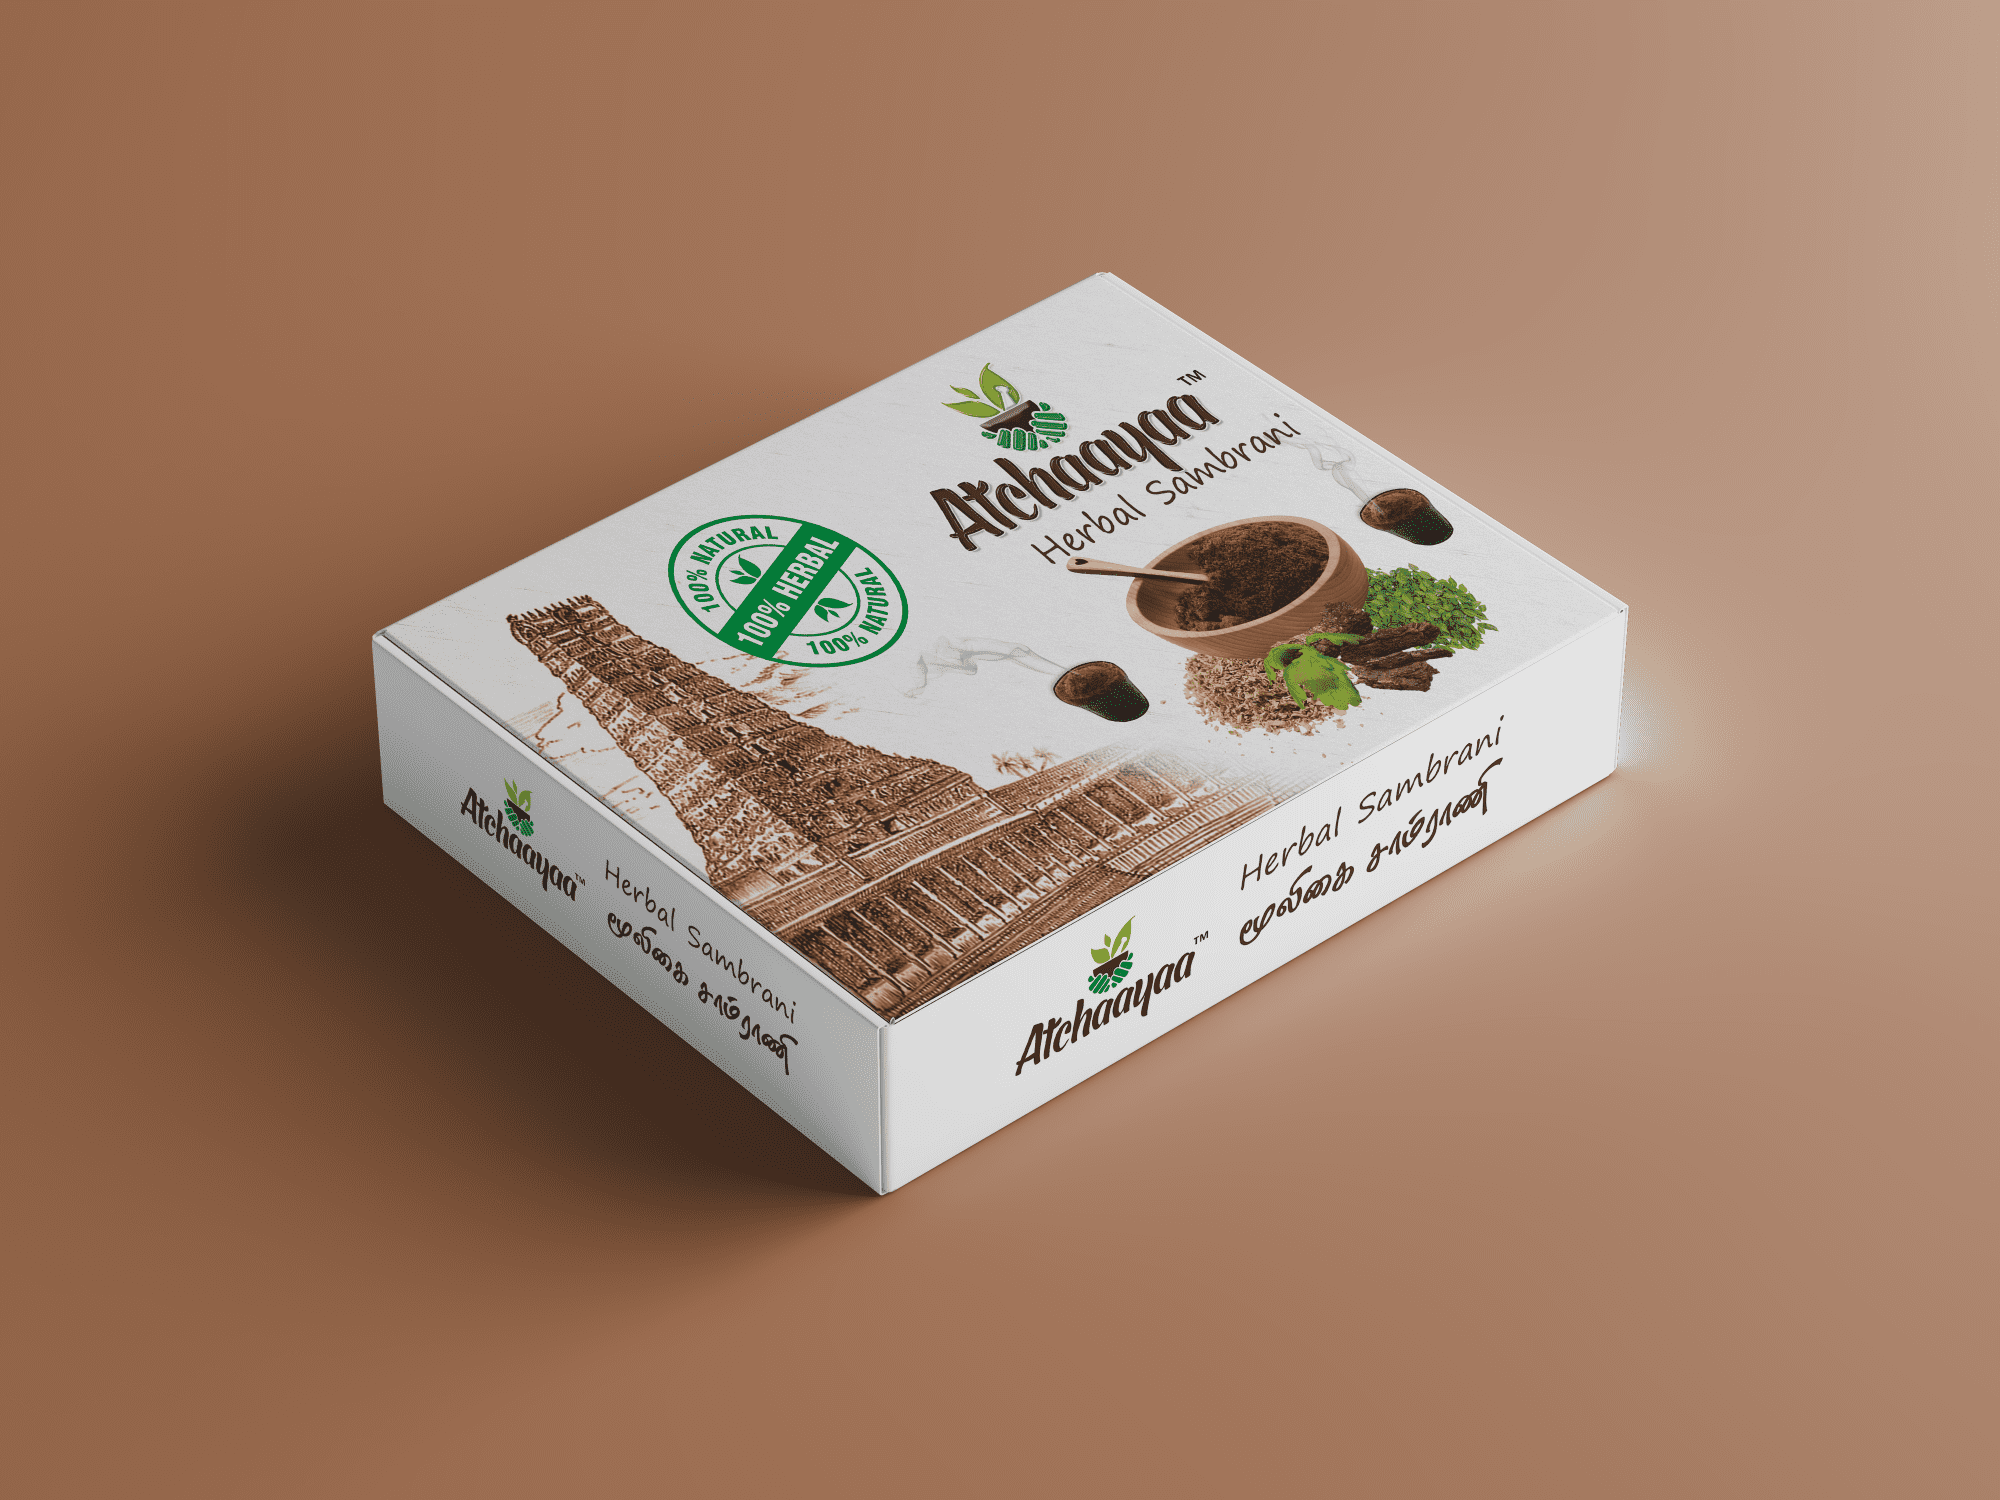 Atchaayaa Herbal Brand Sambrani Packaging Box Design by Creative Prints thecreativeprints